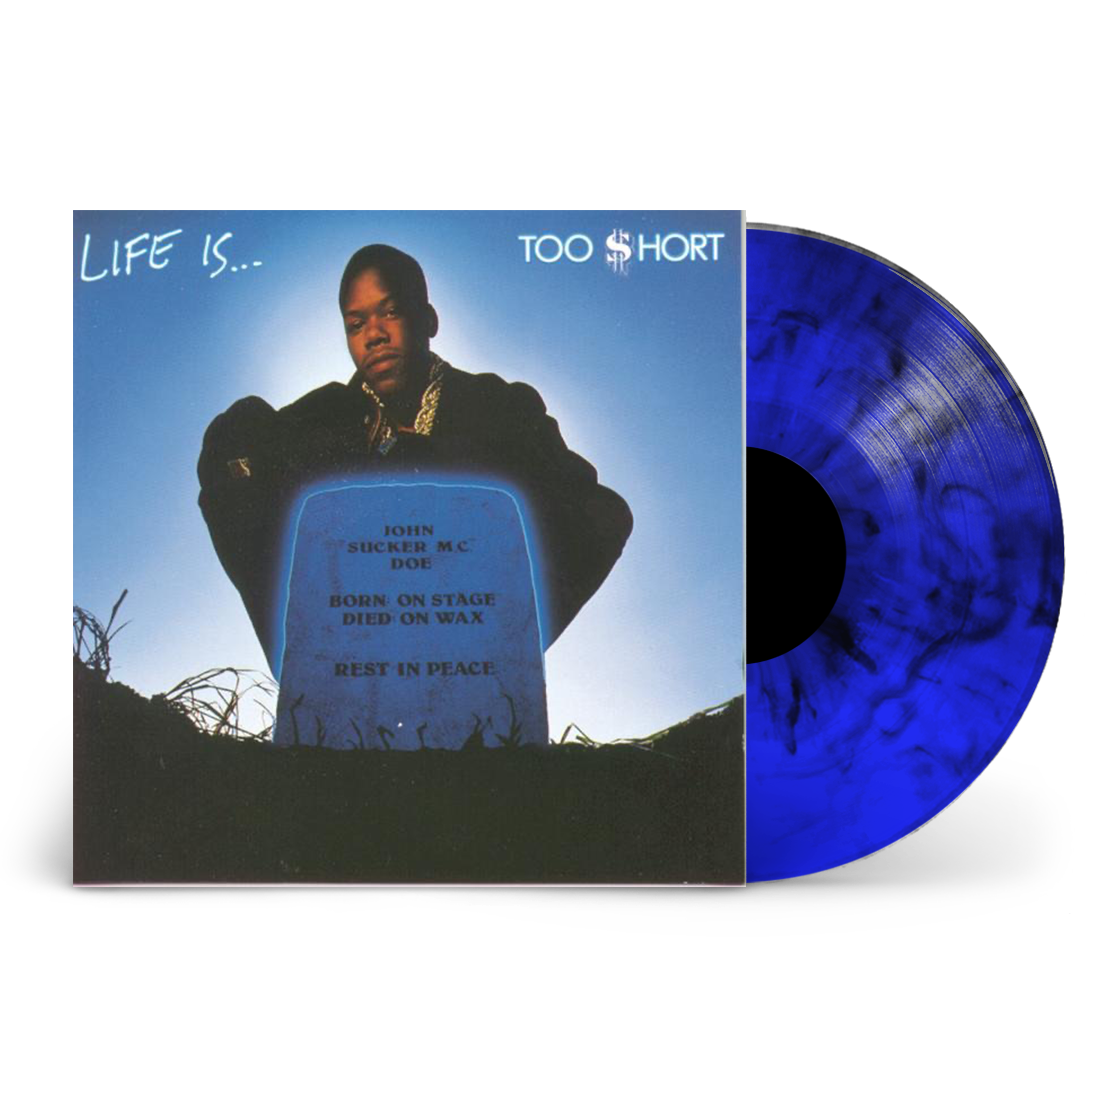 Life Is...Too $Hort: Limited Blue Swirl Vinyl LP